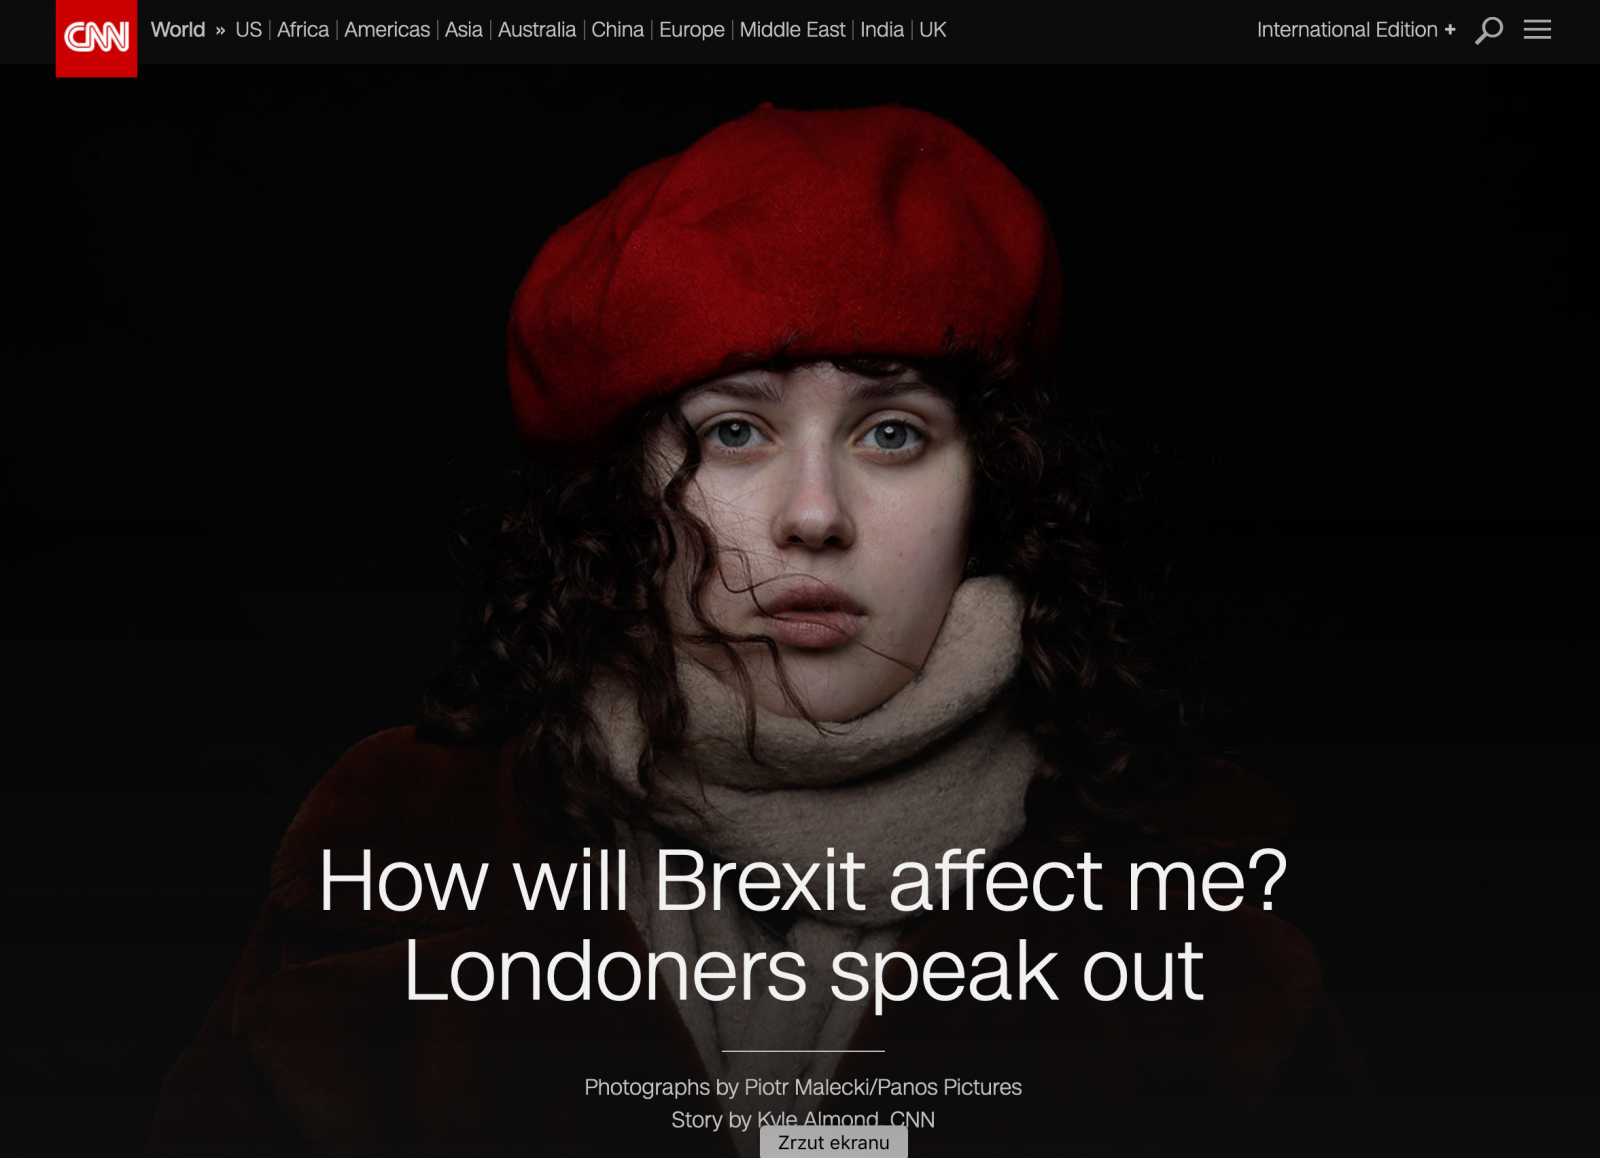 Thumbnail of "Facing Brexit" on CNN website